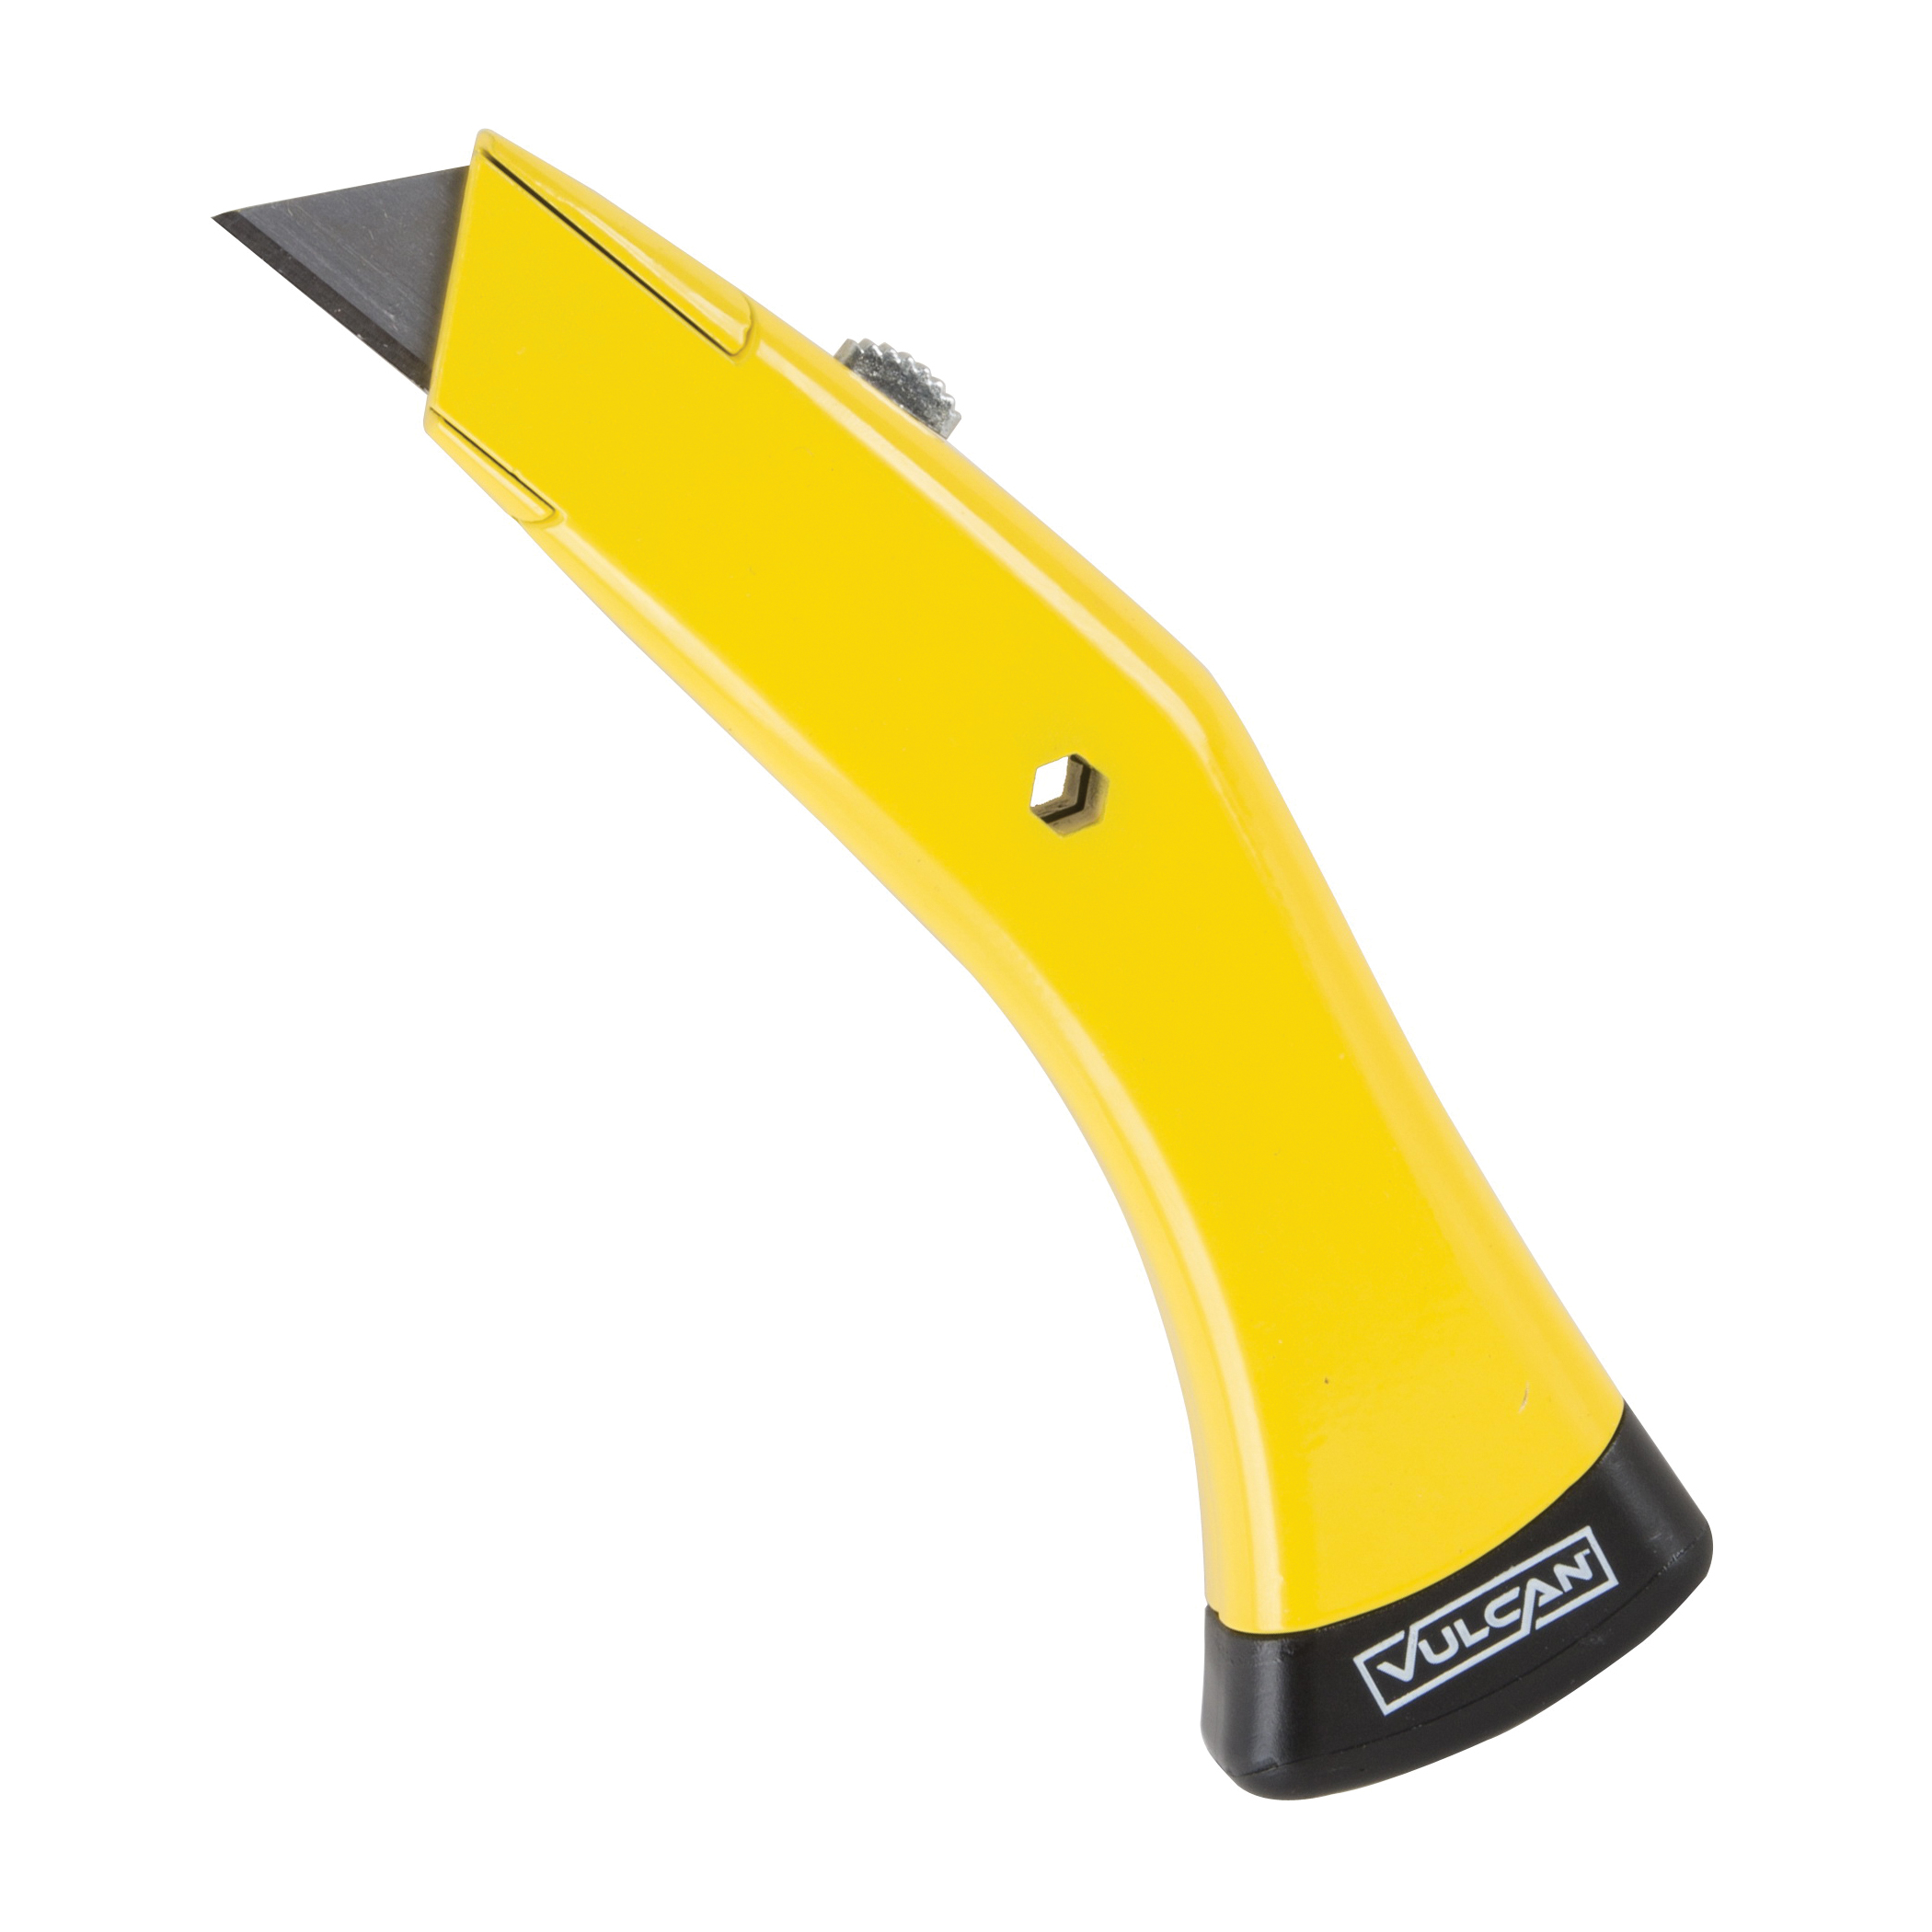 JL-KF0008 Utility Knife, 2-1/4 in L Blade, 3/4 in W Blade, Zinc Alloy Handle, Black/Yellow Handle